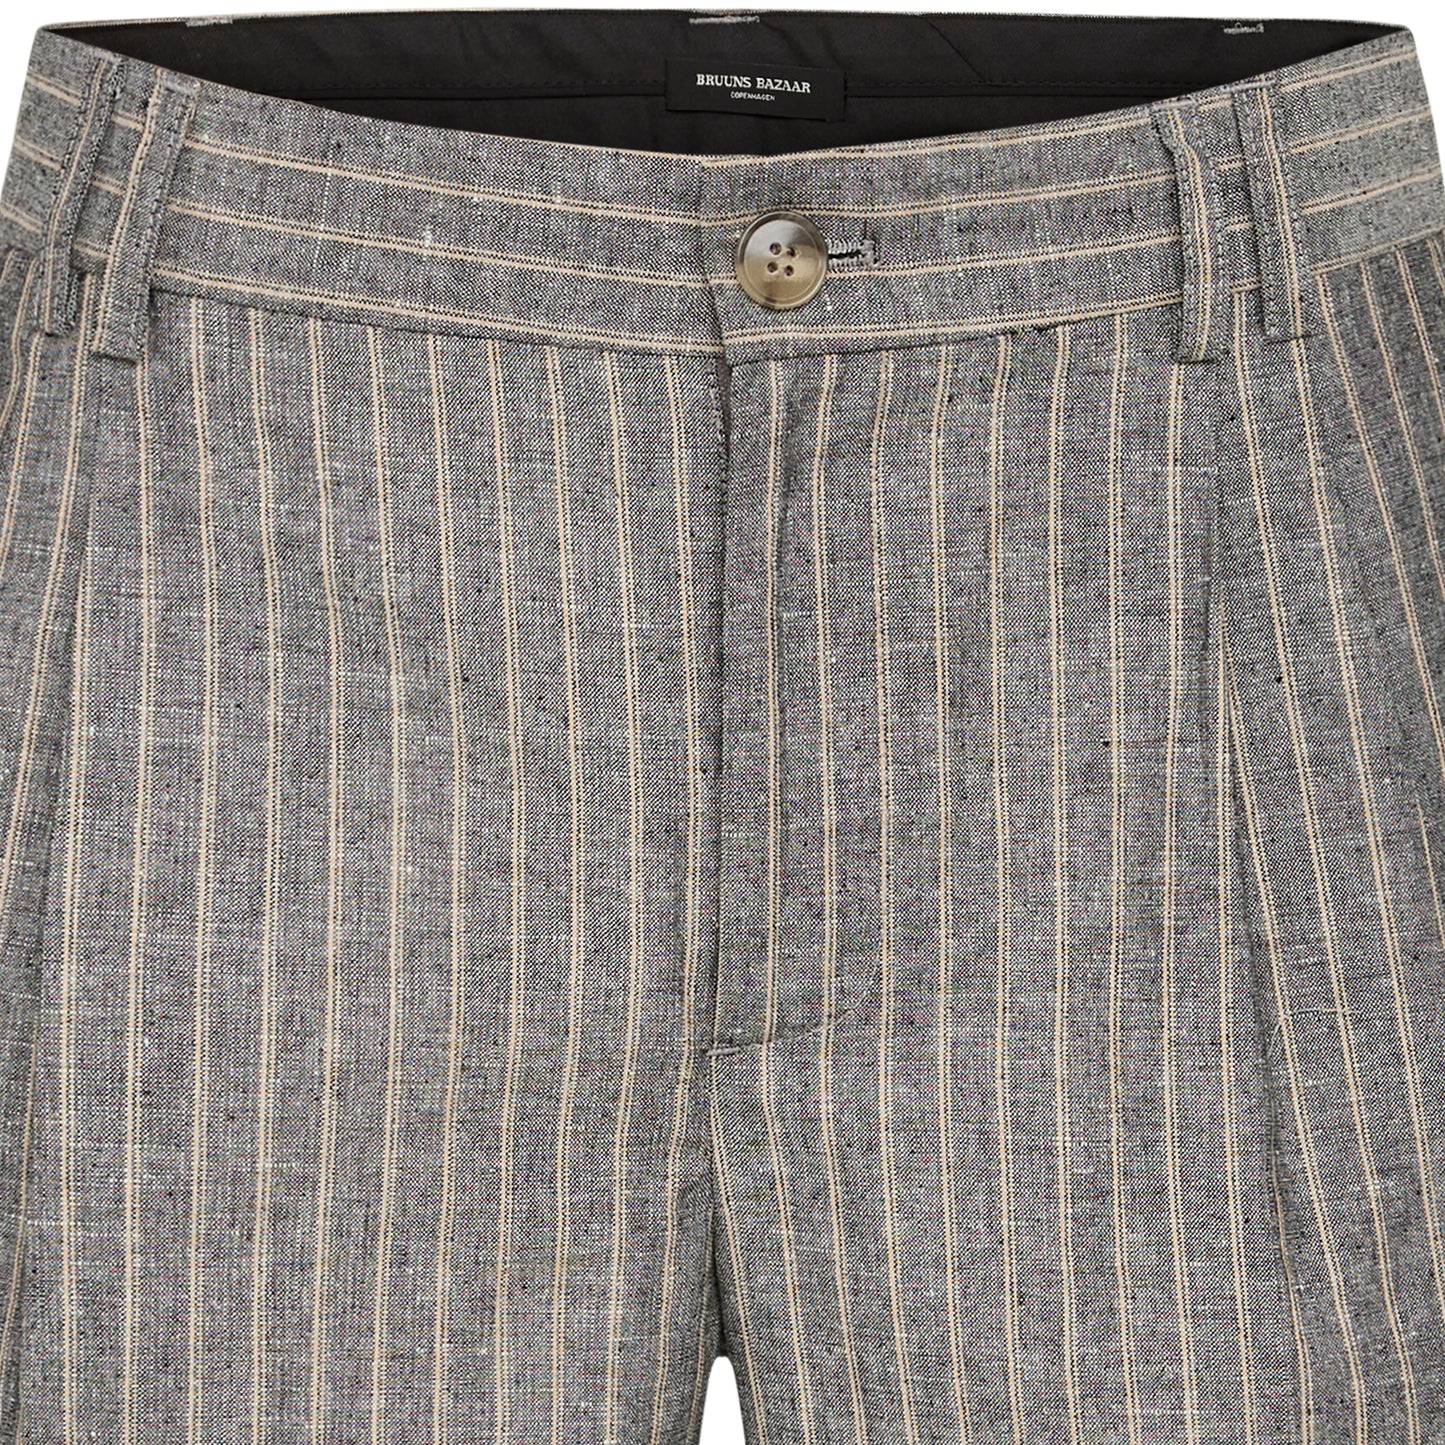 Bruuns Bazaar Men - StiplinBBPleat shorts - Stripe